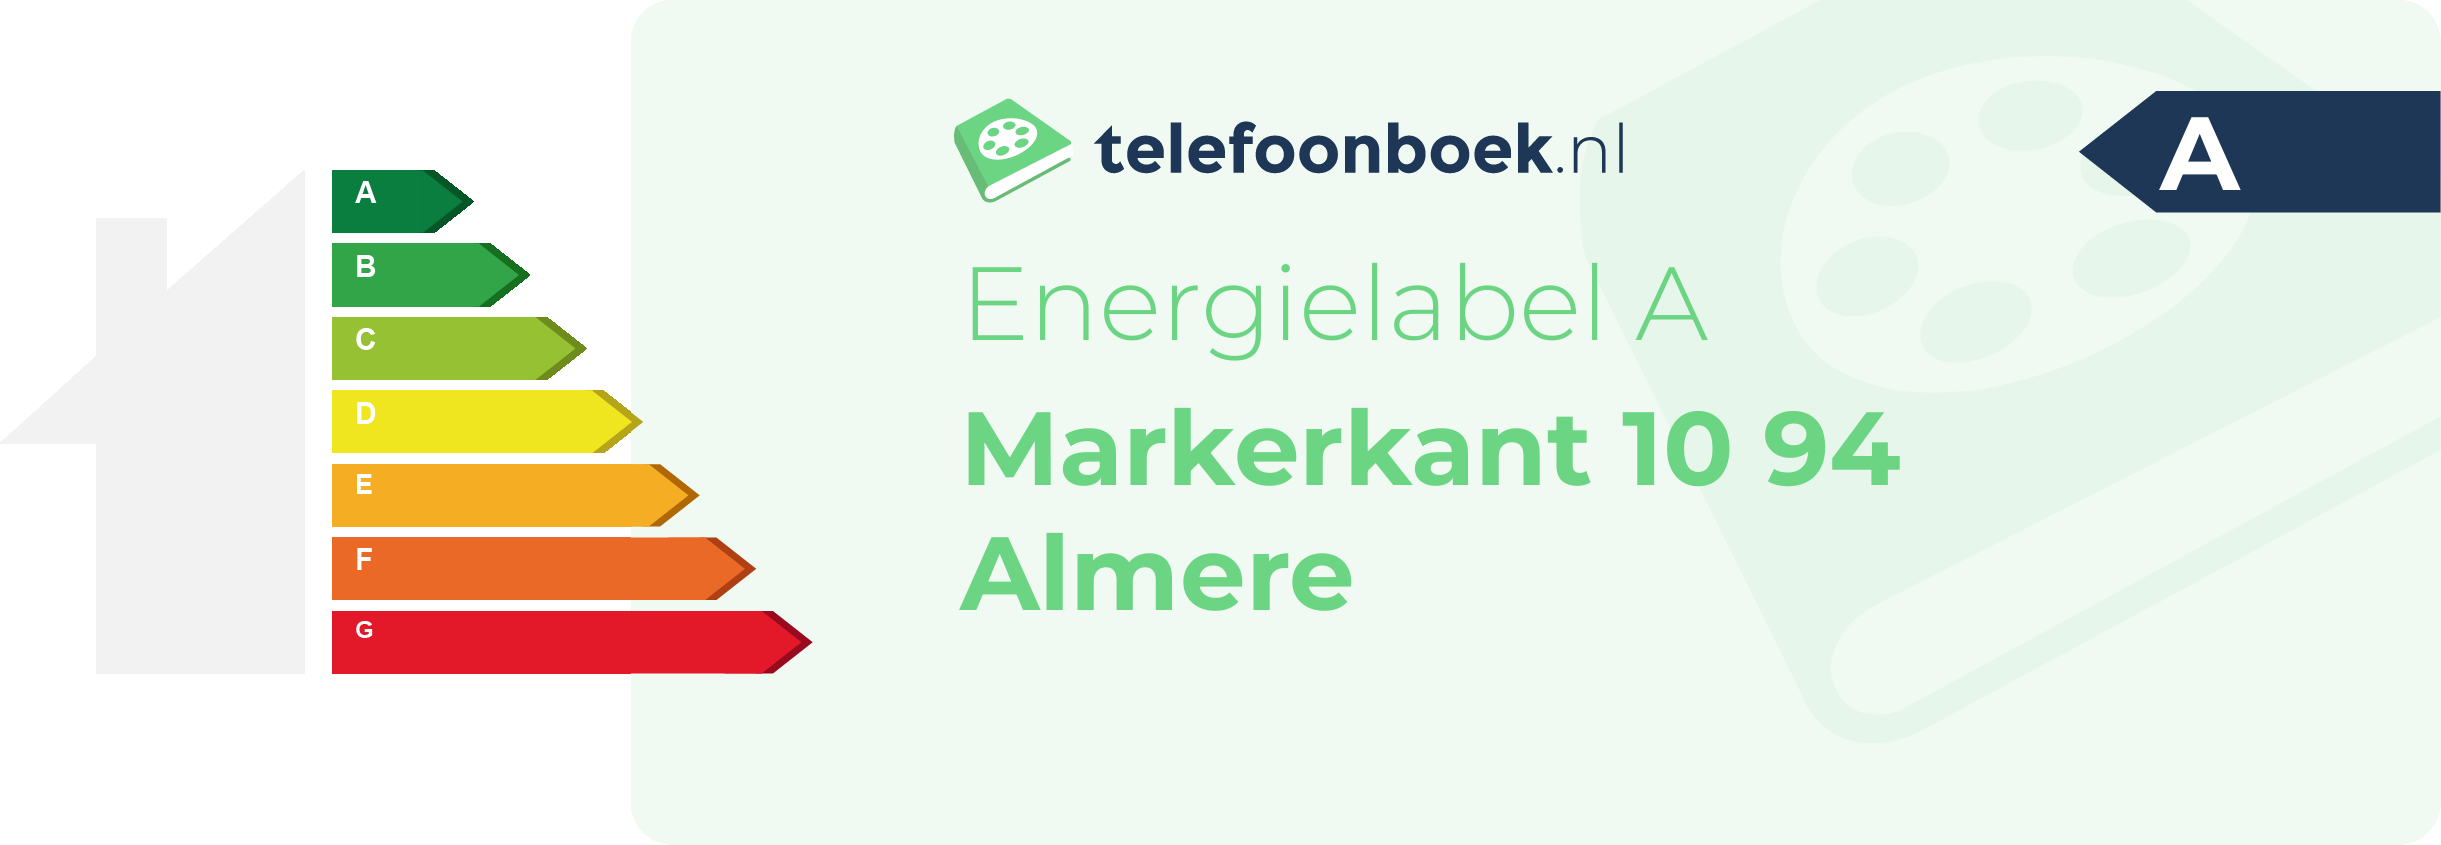 Energielabel Markerkant 10 94 Almere